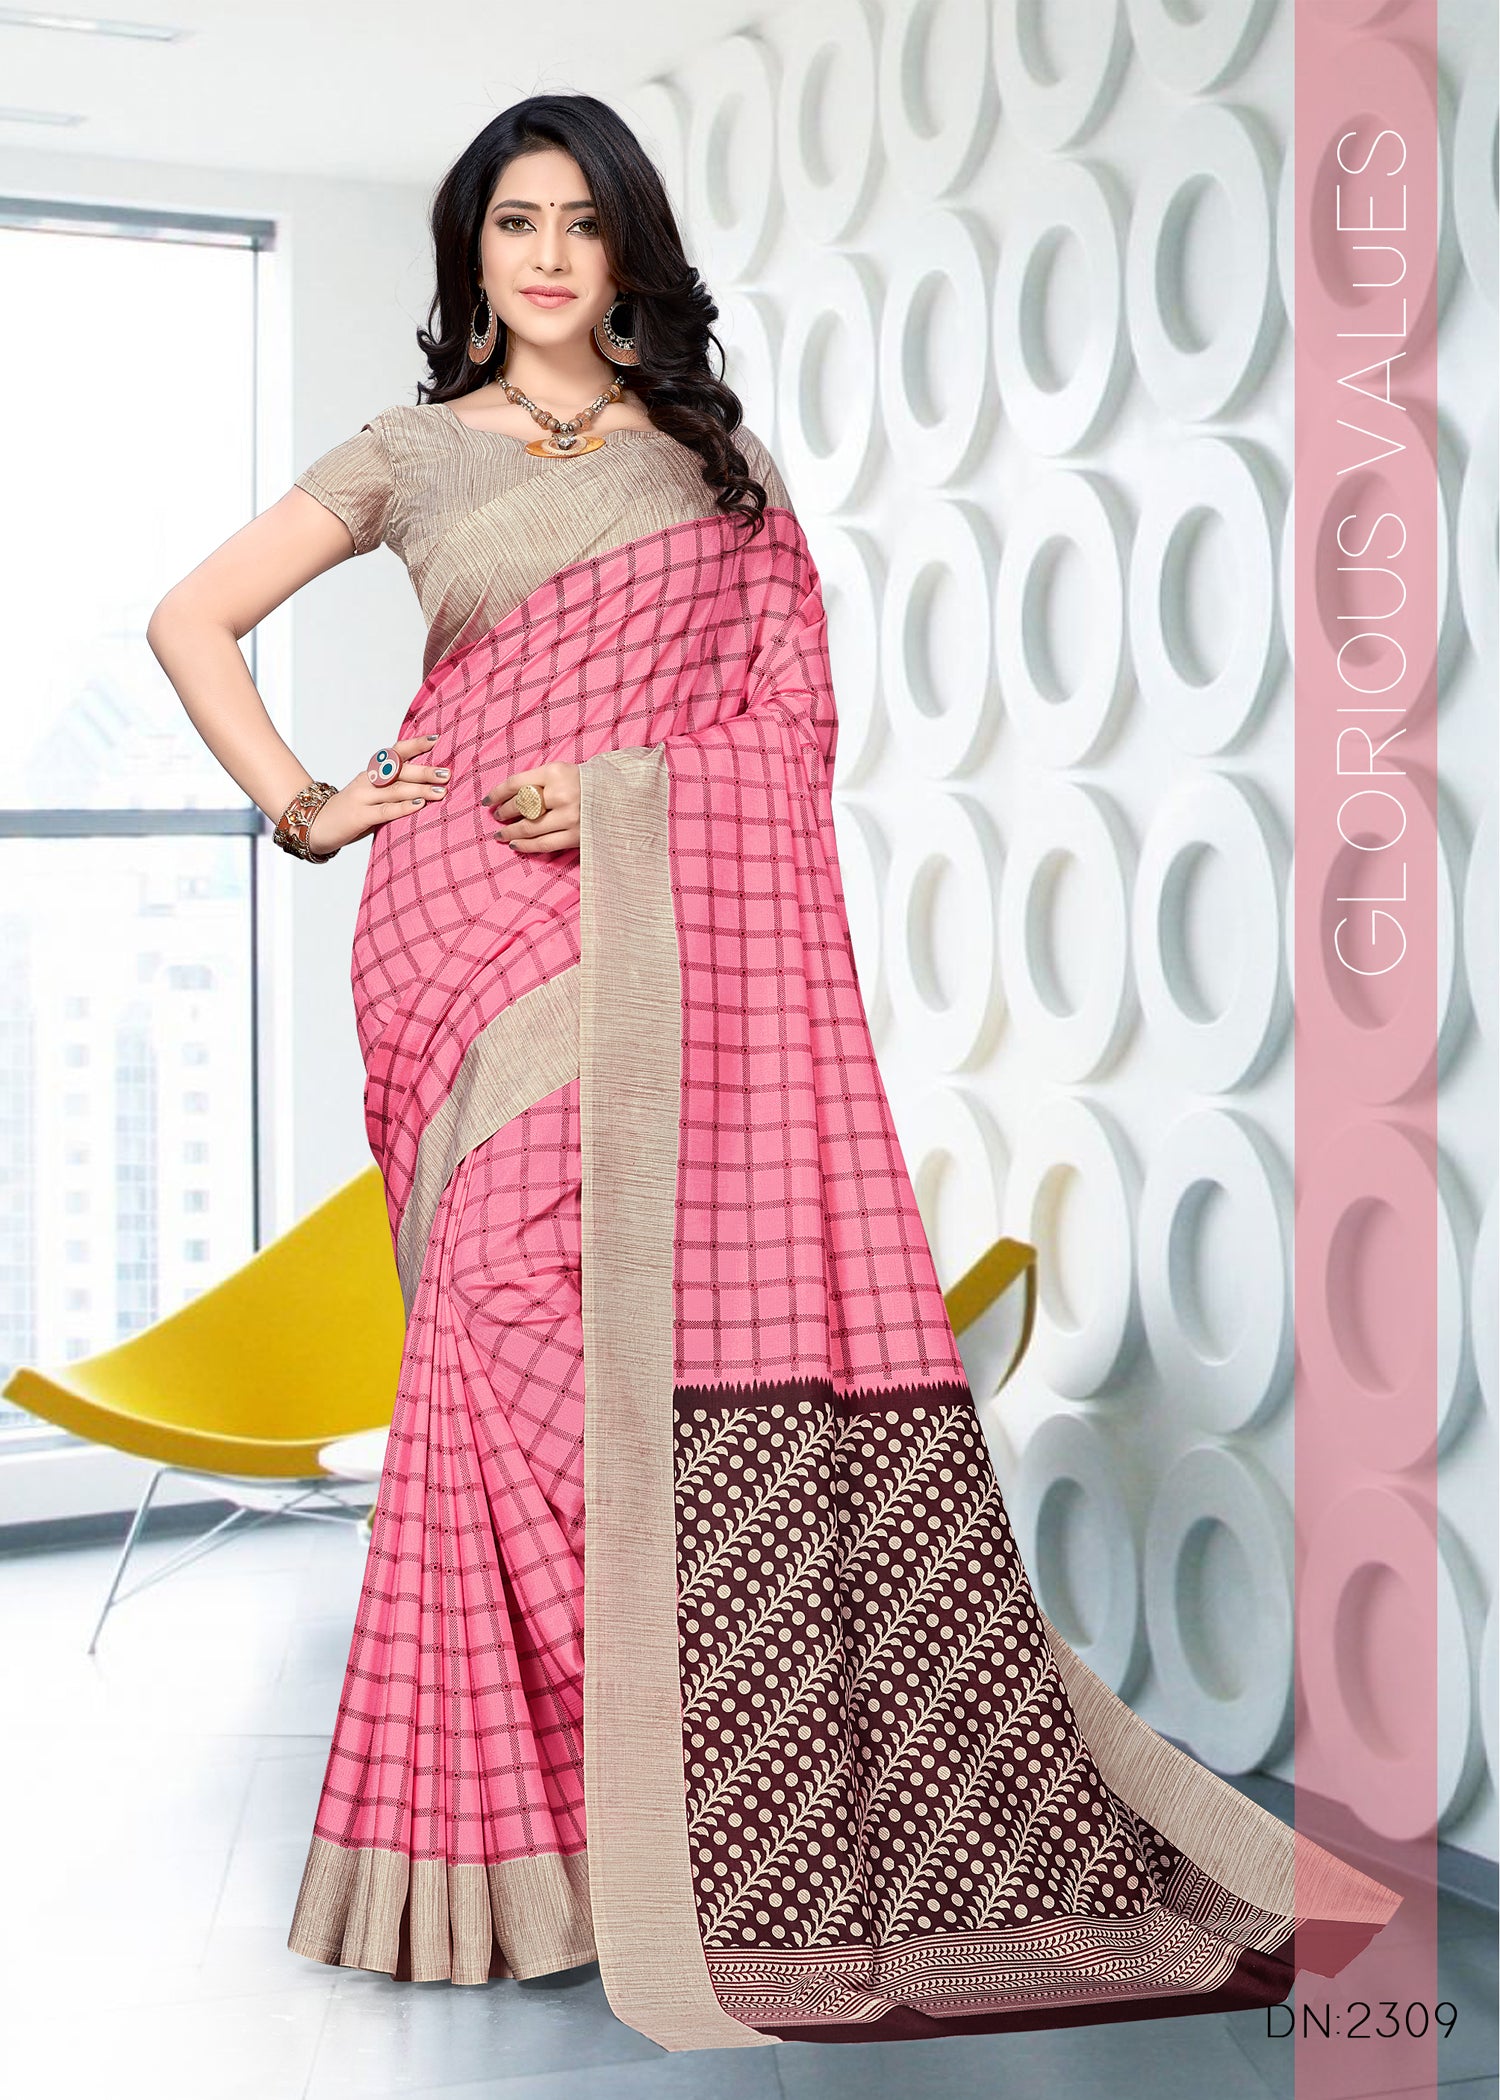 Vimla Women's Pink Malgudi Art Silk Uniform Saree with Blouse Piece (2309_Pink)